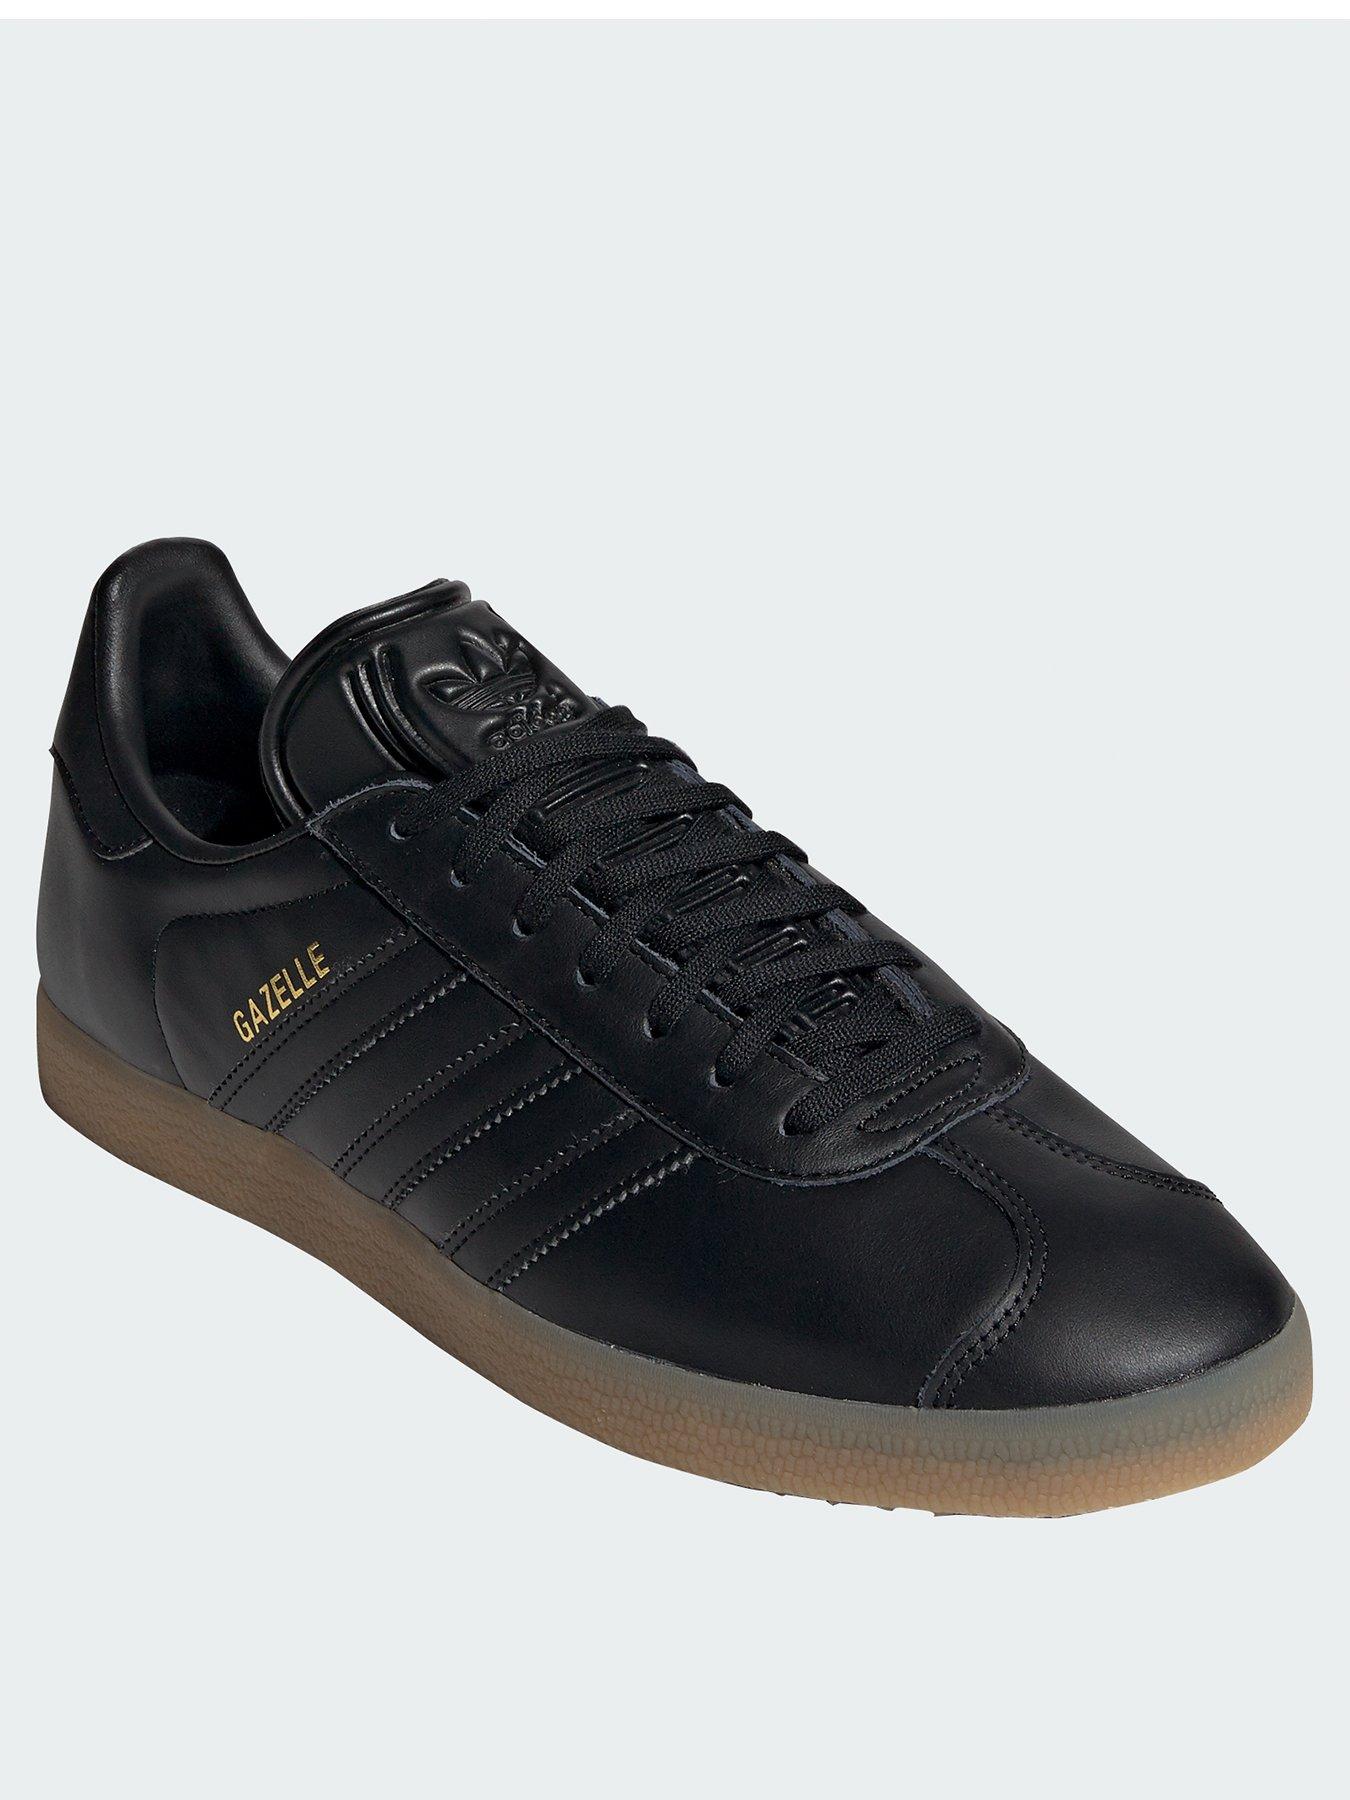 adidas originals gazelle trainers in black